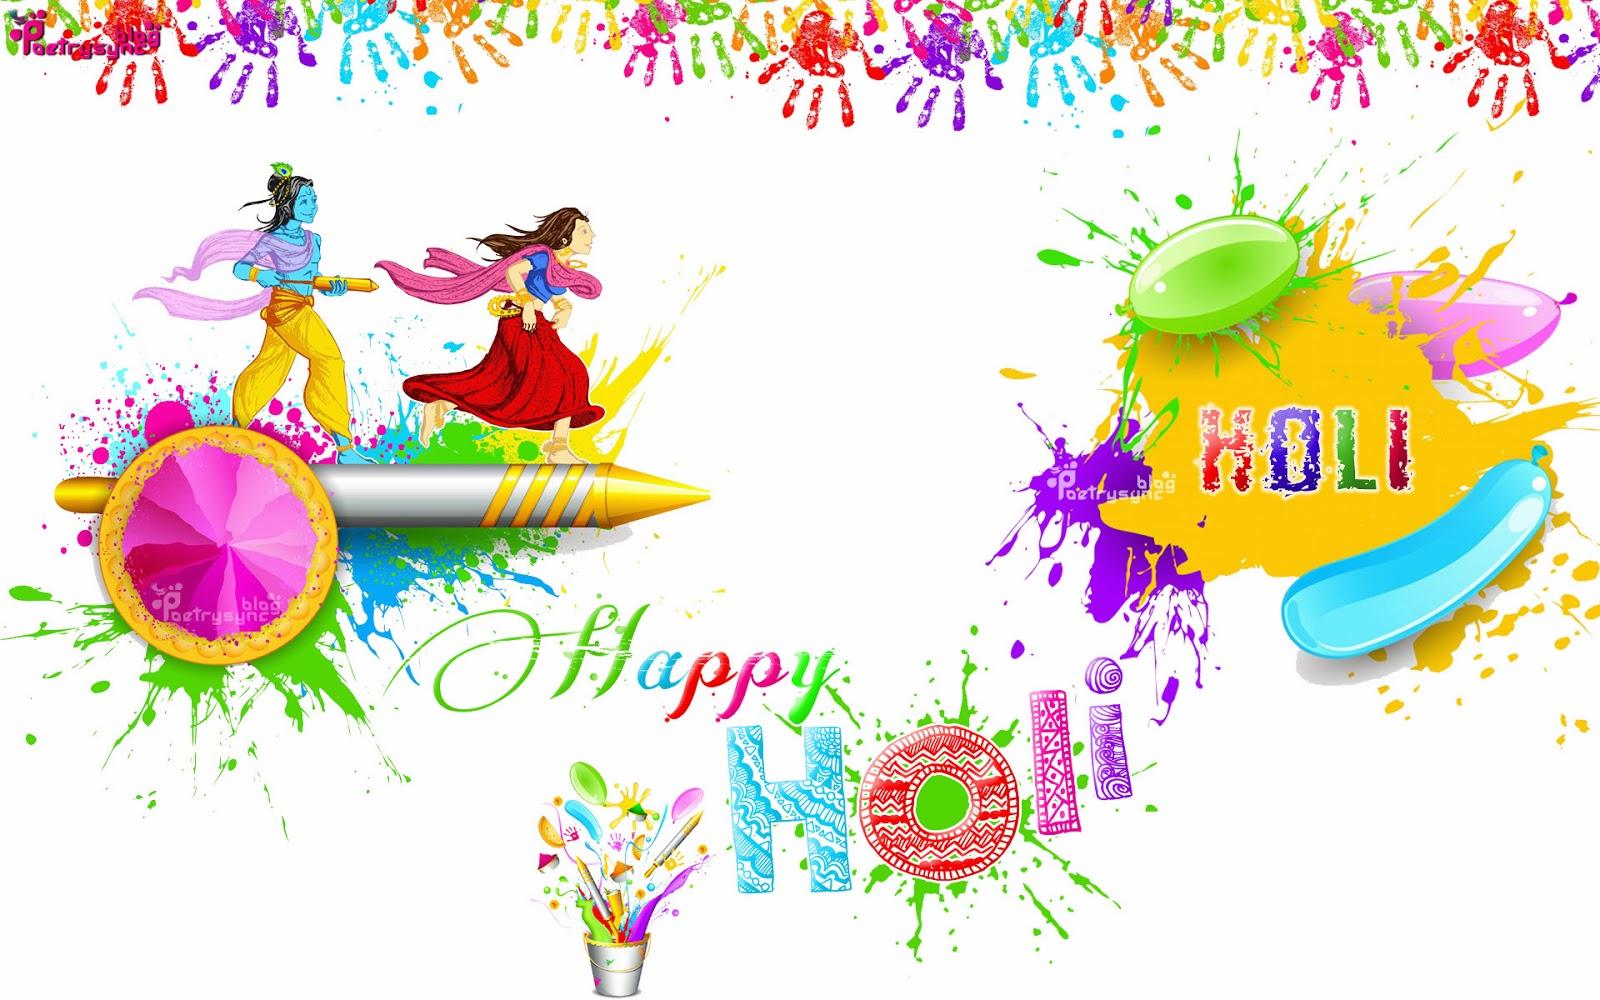 Happy Holi HD Image, Wallpaper, Pics (Free Download)